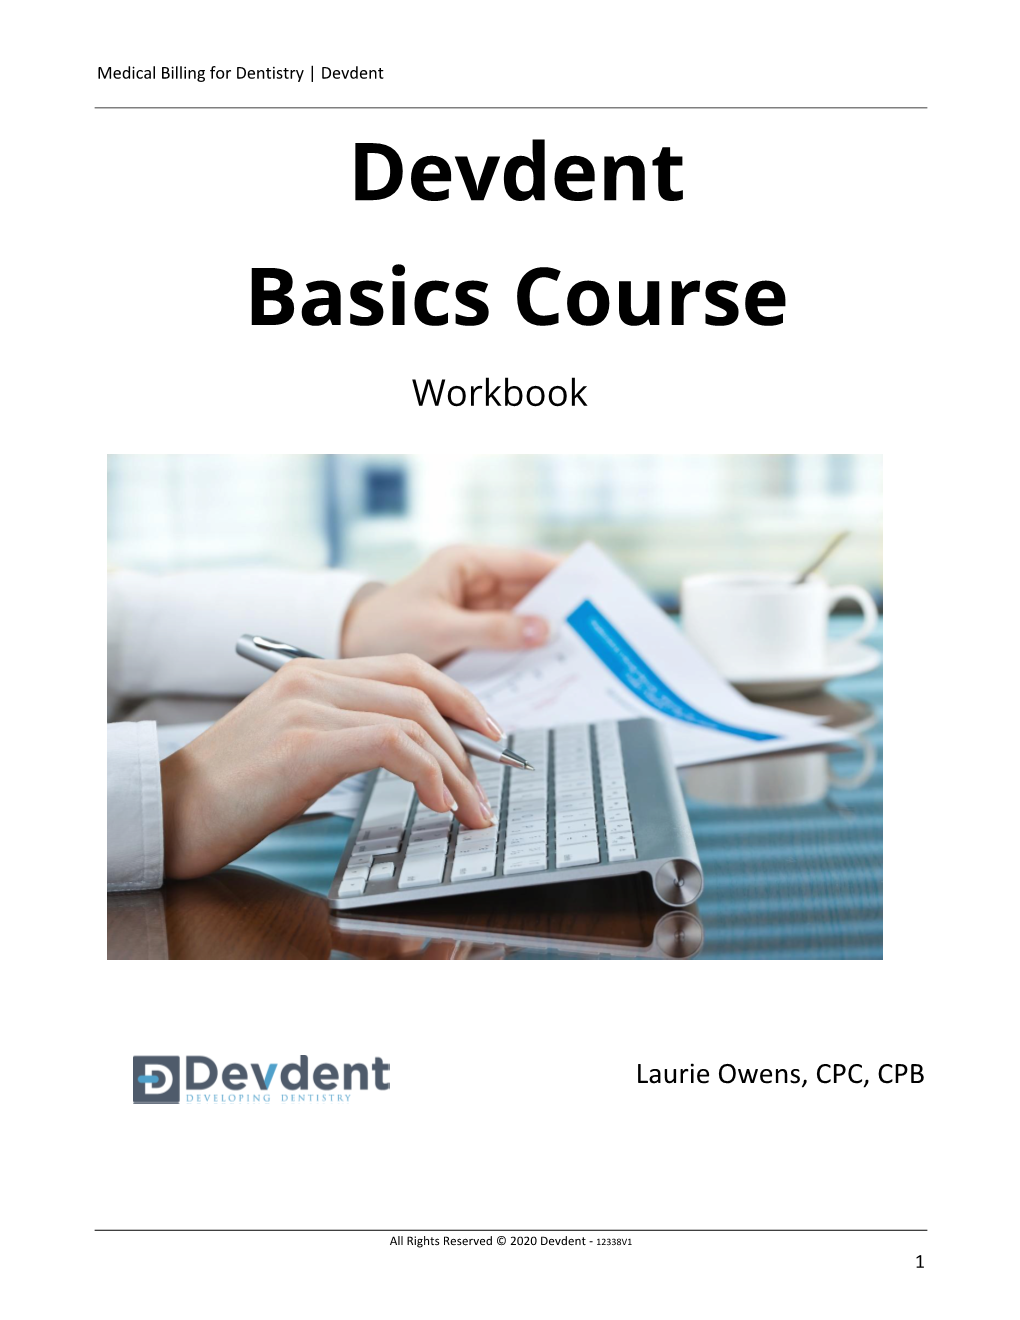 Devdent Basics Course